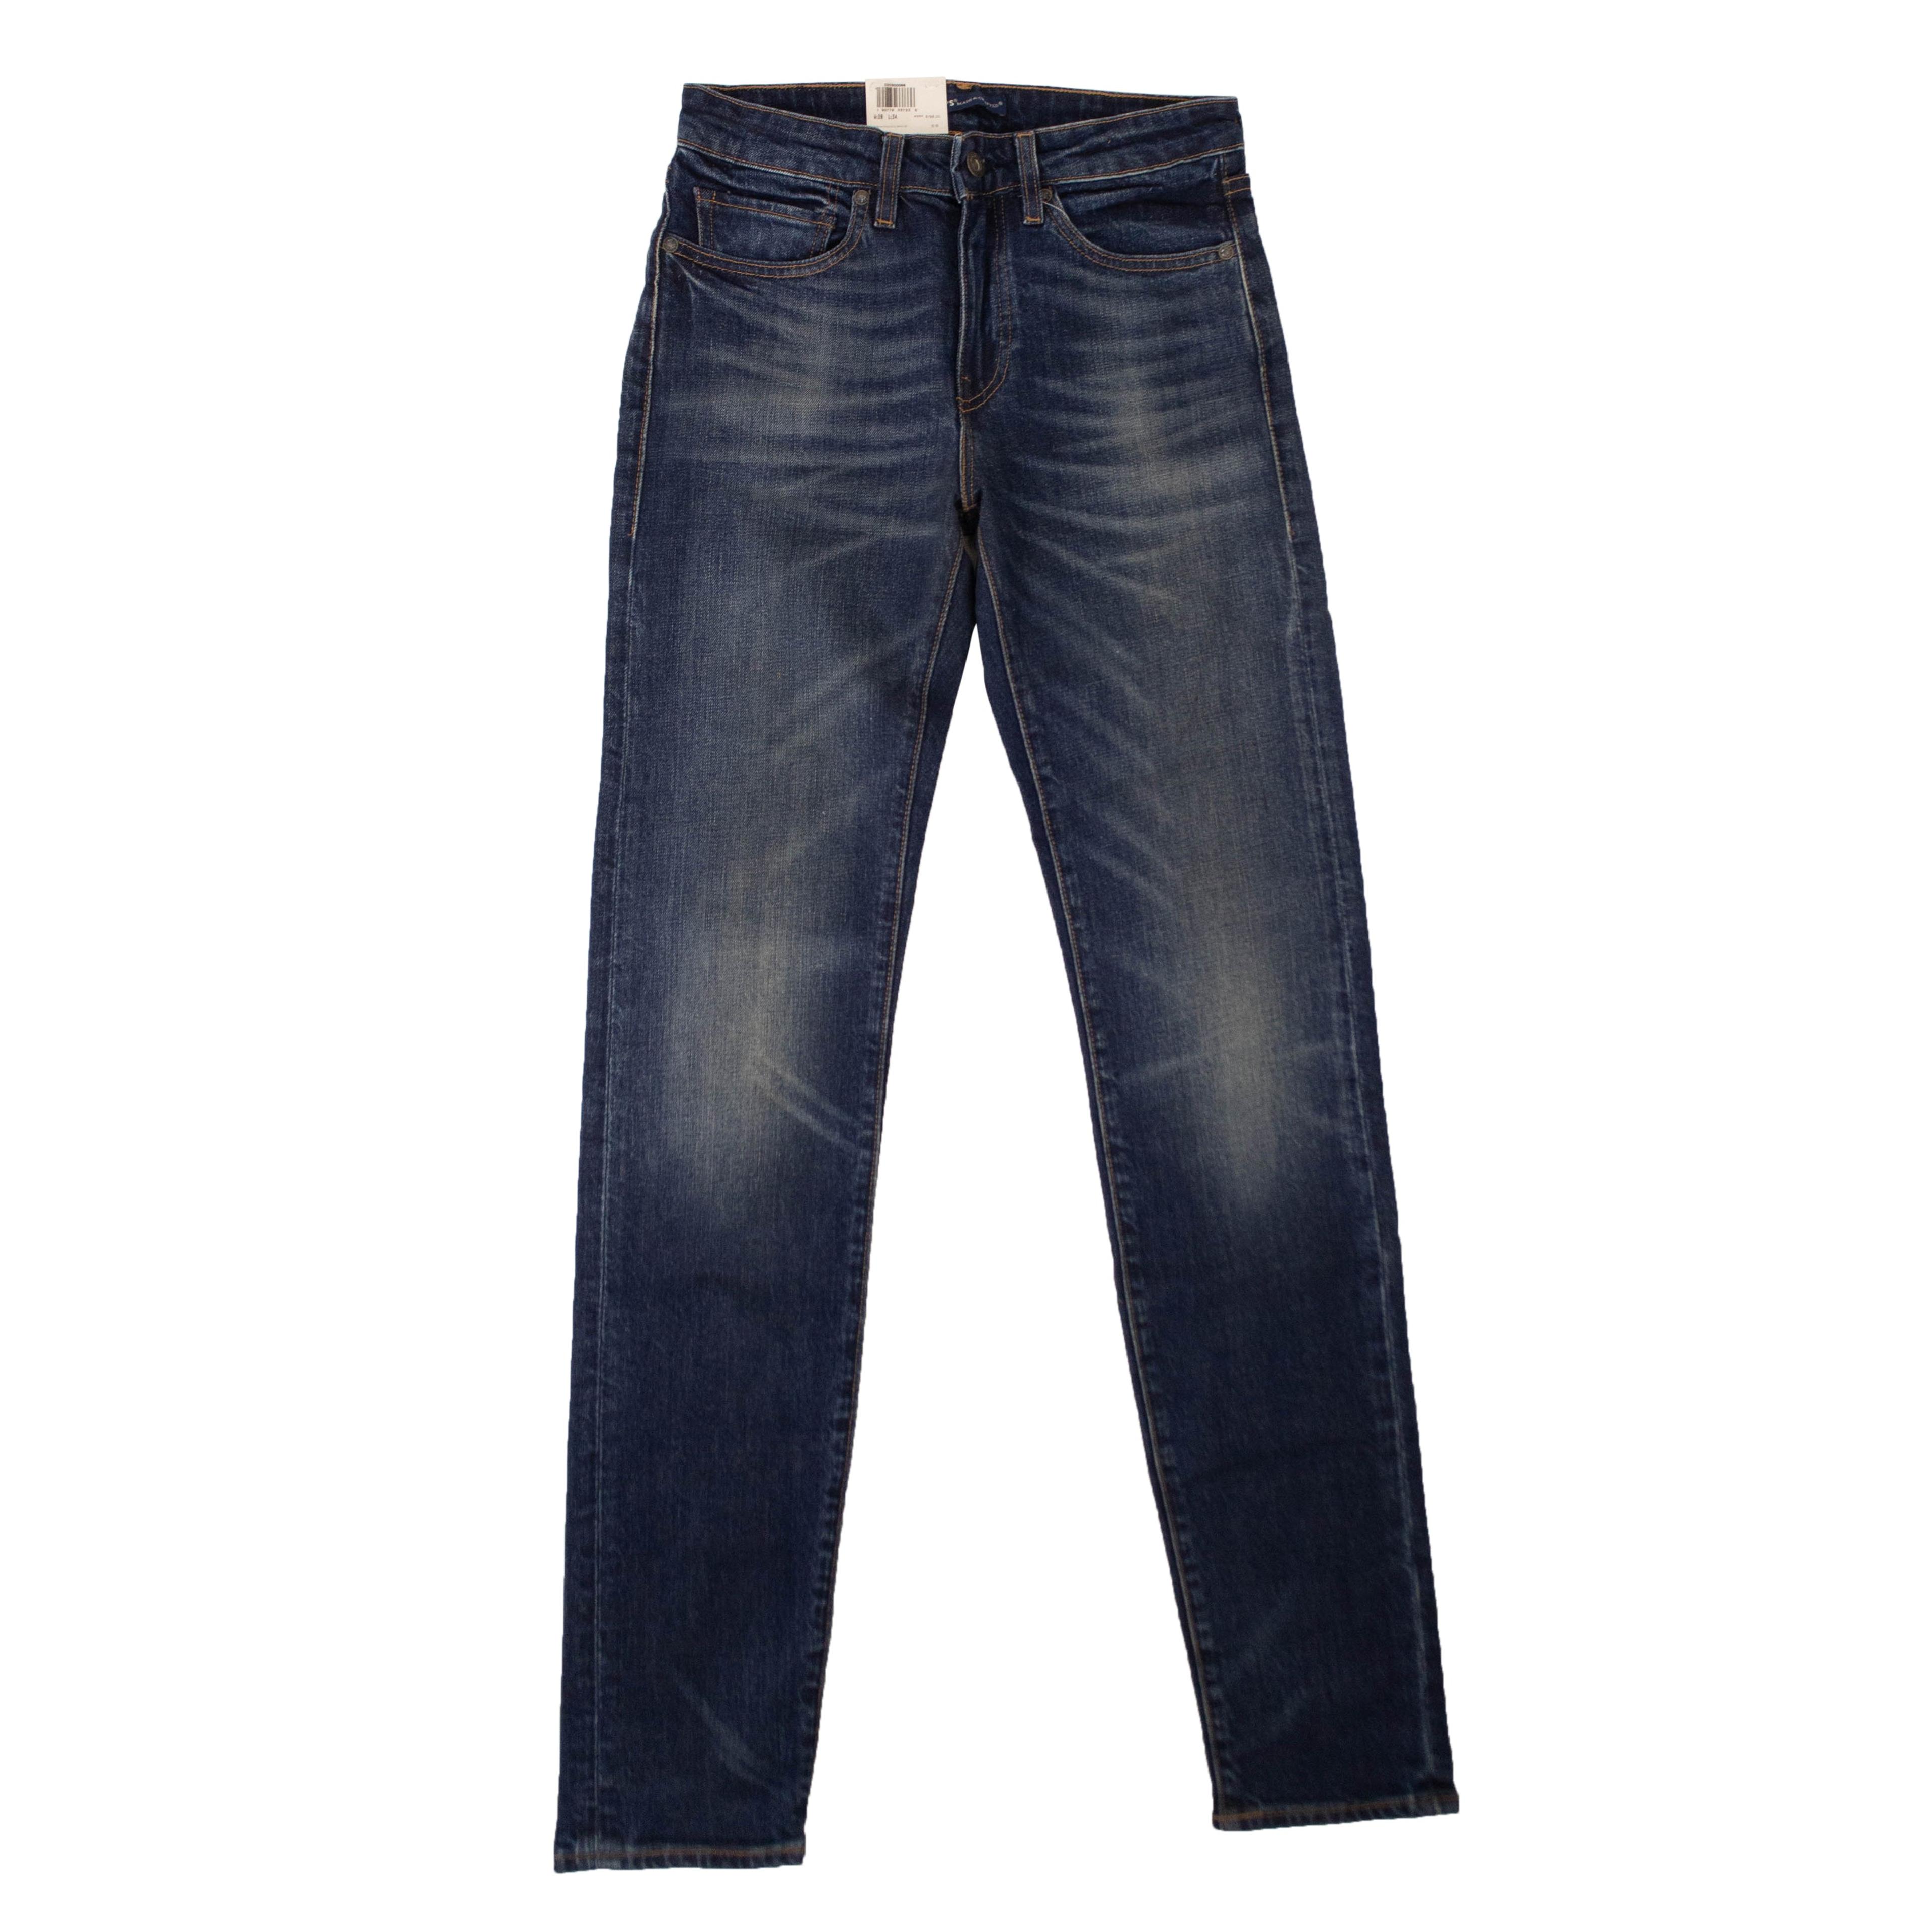 Levi'S Made & Crafted Chiba Needle Narrow Denim Jeans - Dark Was